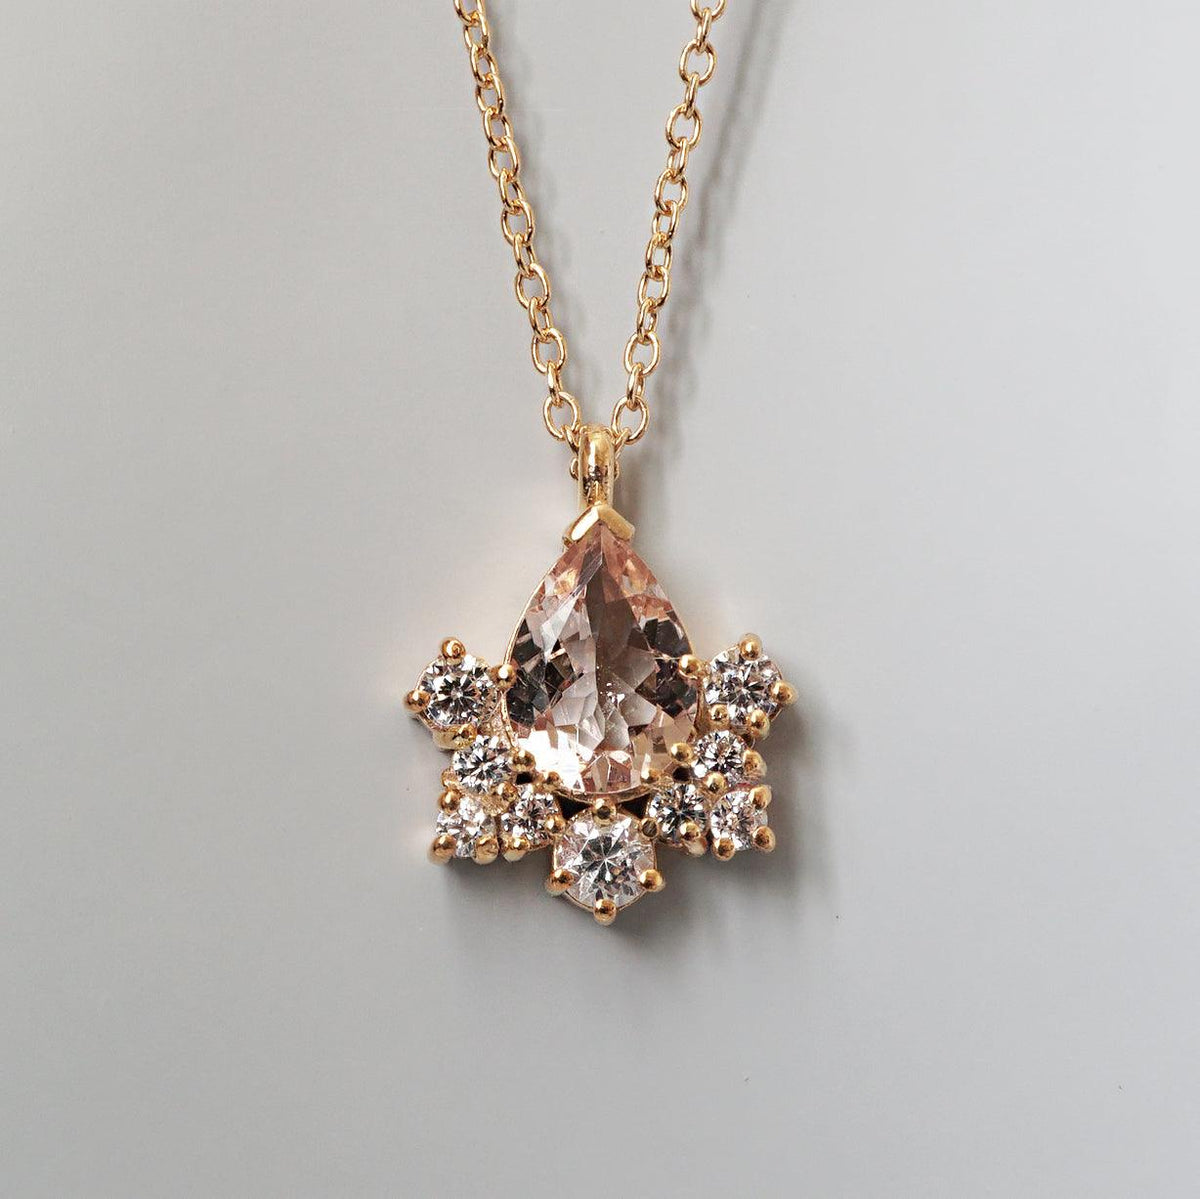 Sleeping Beauty Morganite Necklace - Tippy Taste Jewelry